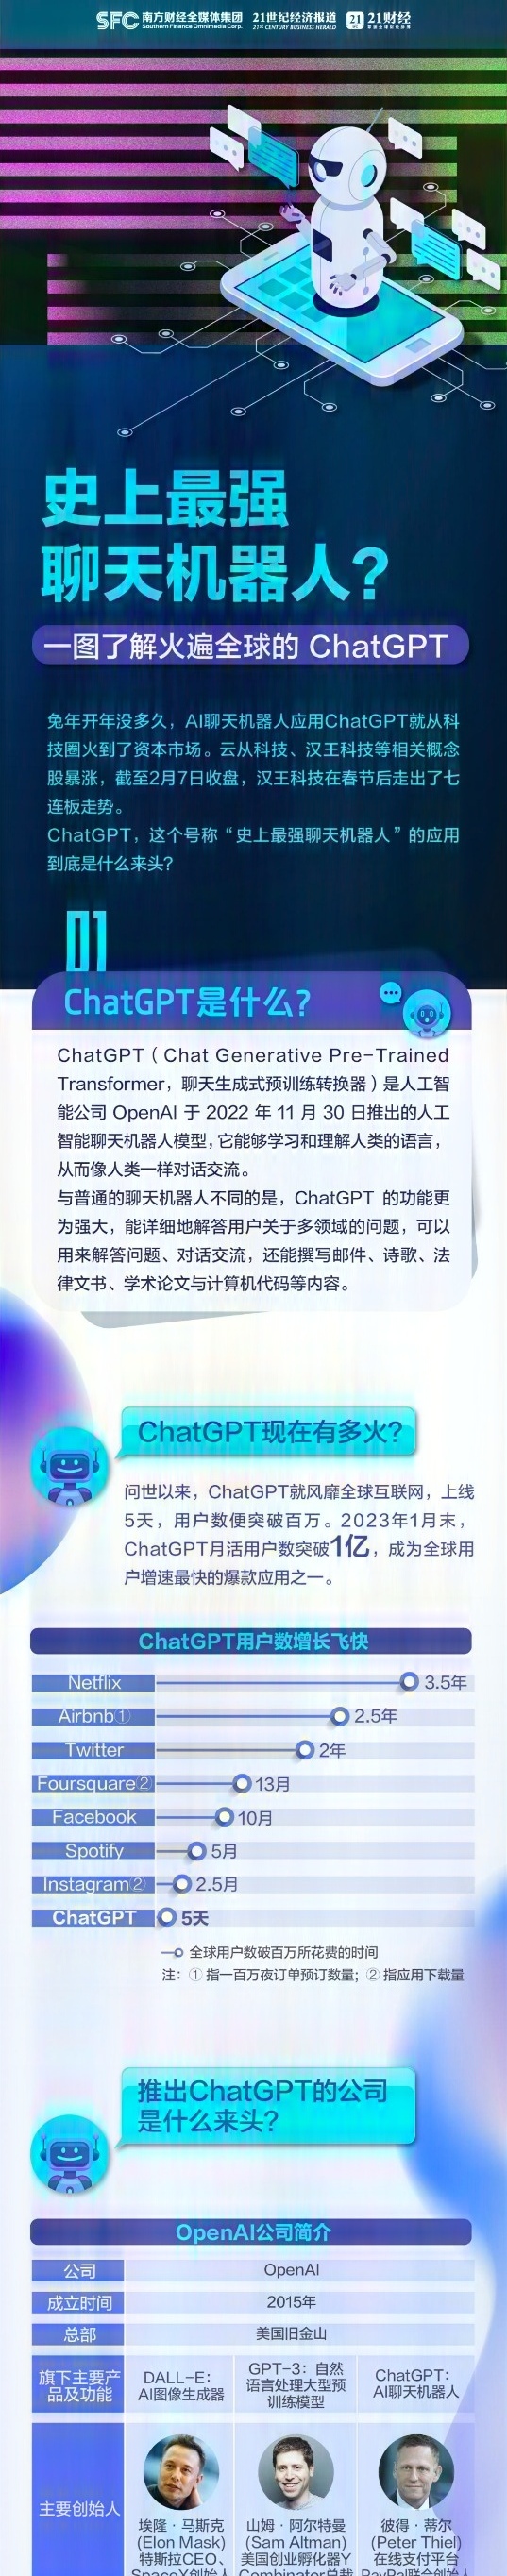 ChatGPT一图惊天地改变人类龙头在这里。